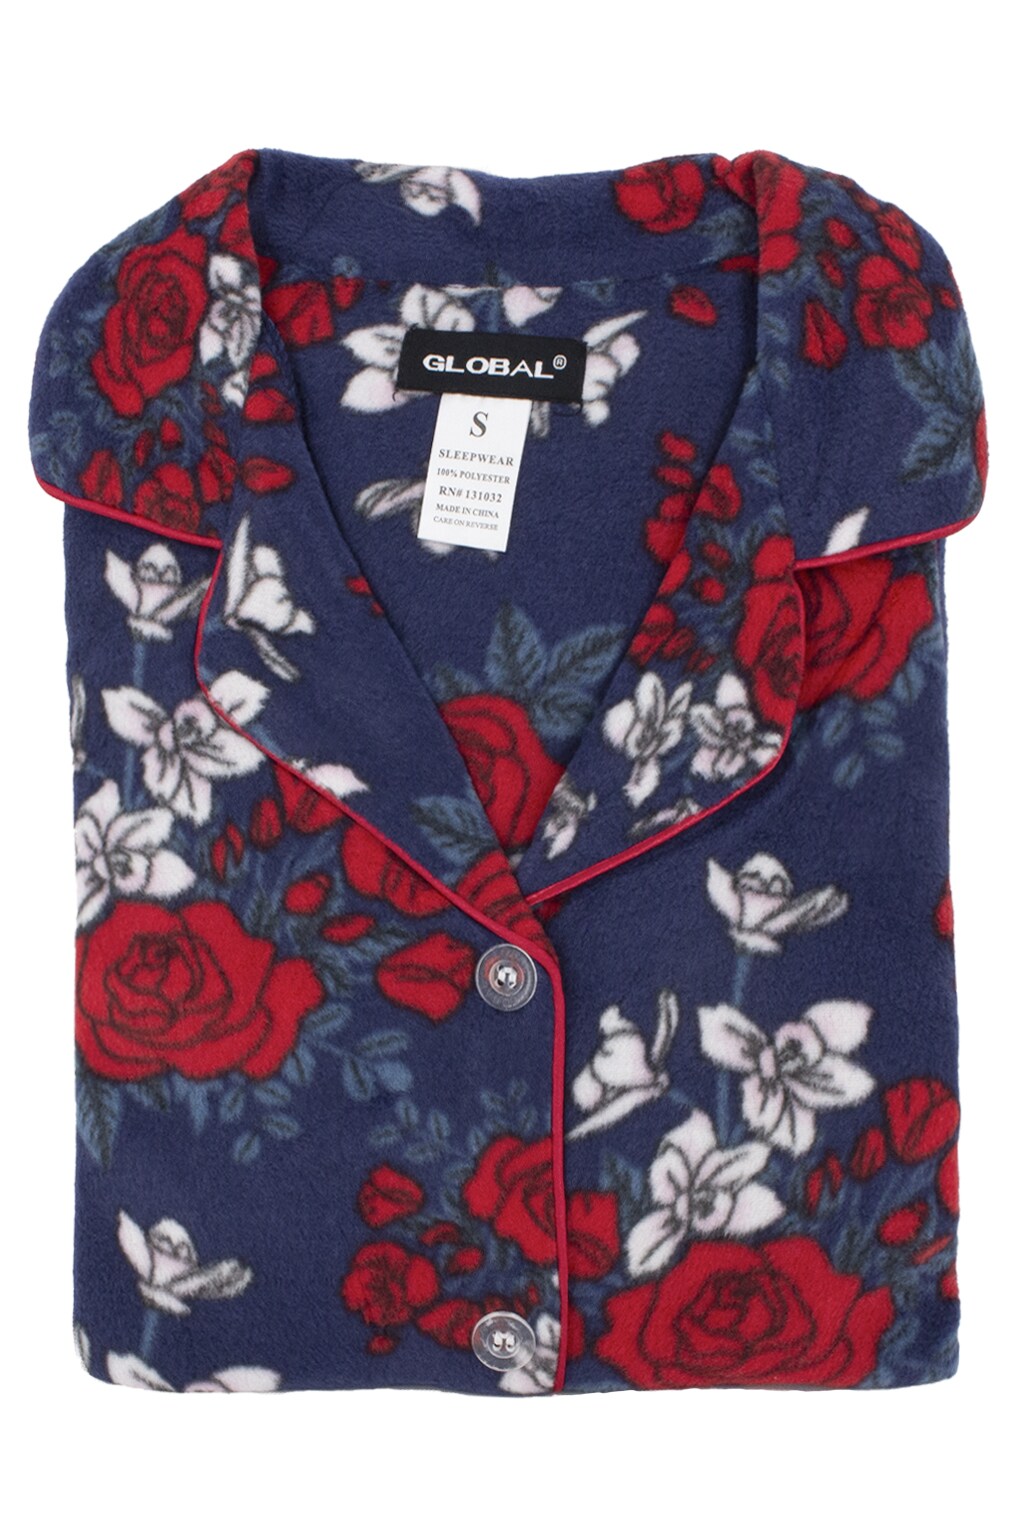 GLOBAL&#xAE; - Ladies Fleece PJ Set Made with 100% Polyester